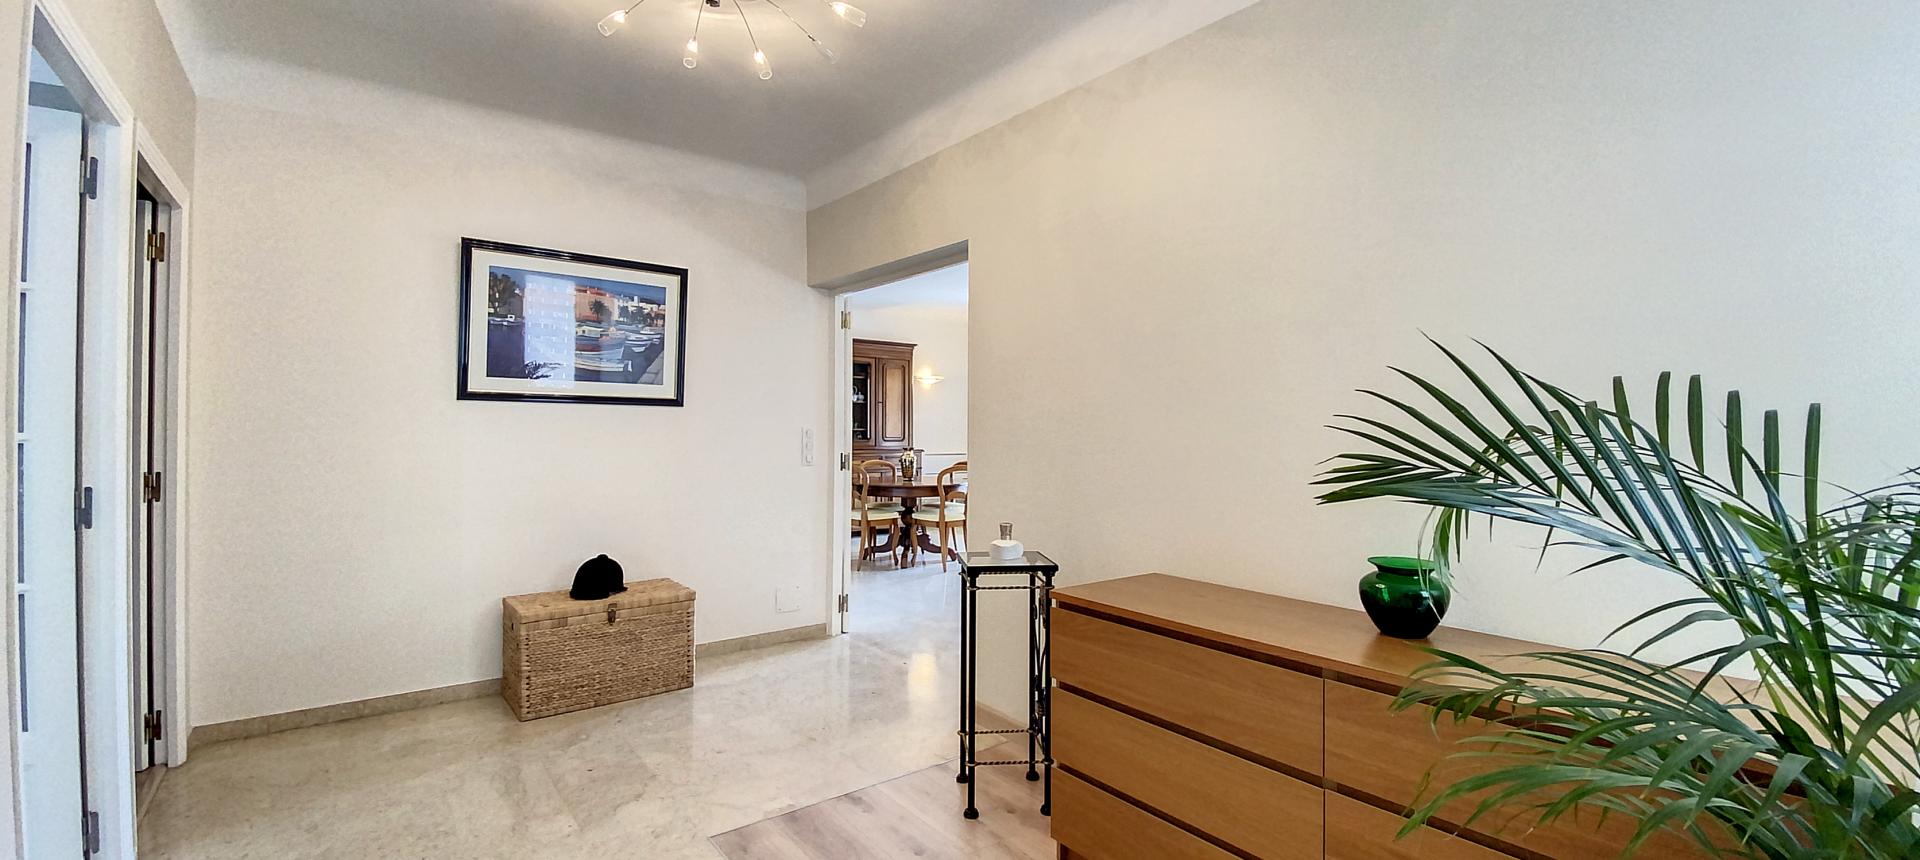 Vente appartement F5 haut de villa à Ajaccio - Route d'Alata